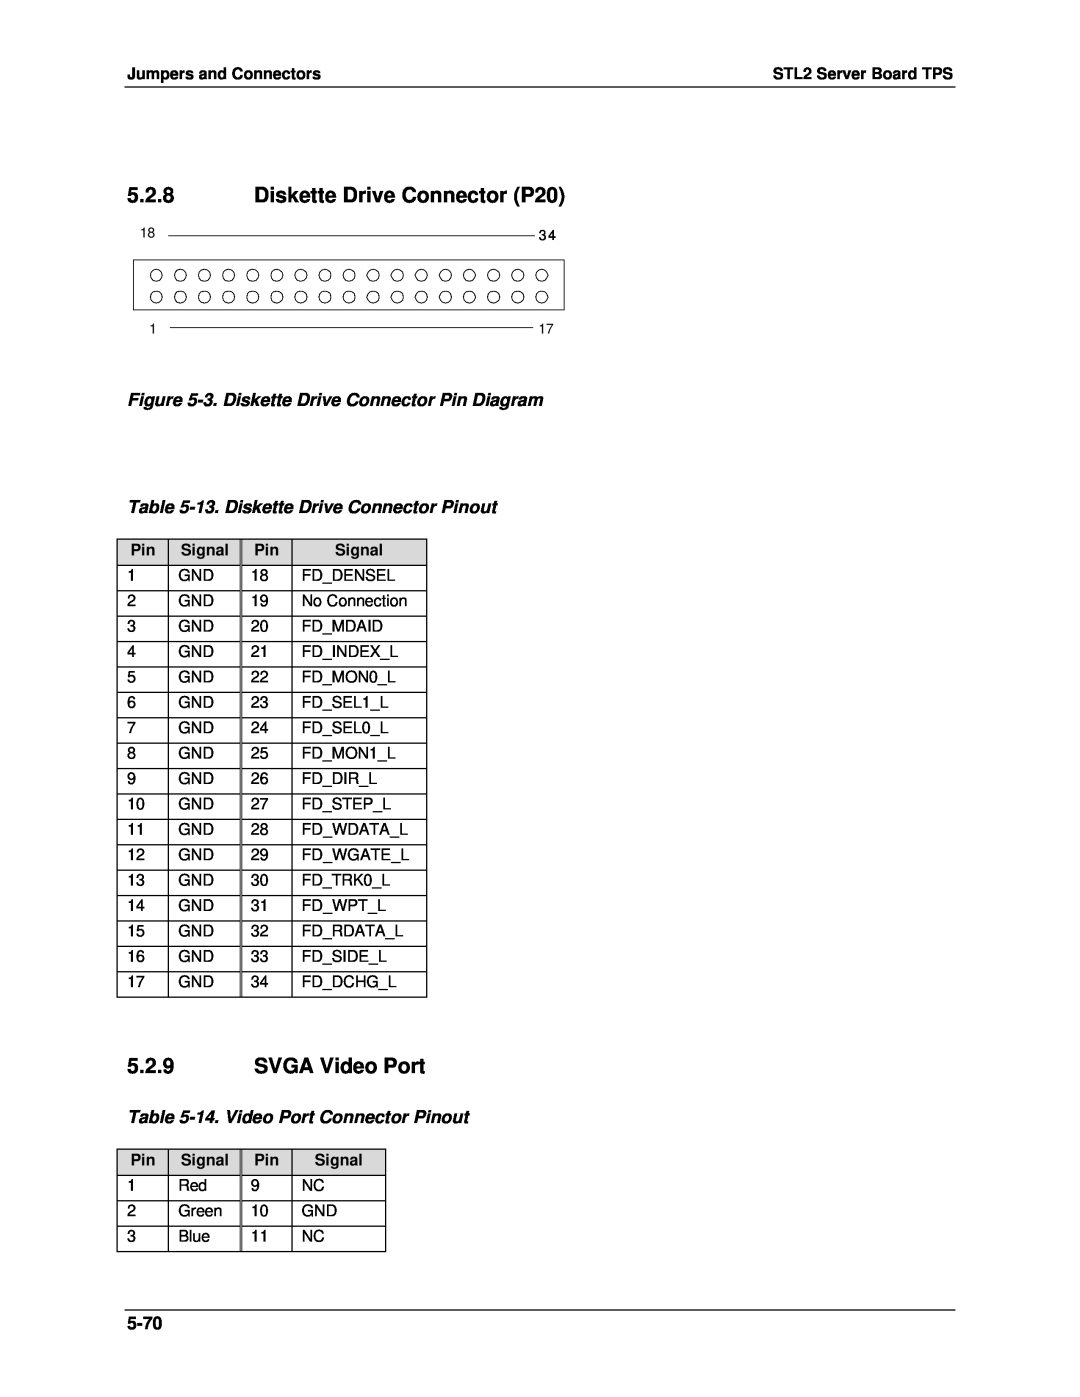 Intel STL2 manual 5.2.8Diskette Drive Connector P20, 5.2.9SVGA Video Port, 3.Diskette Drive Connector Pin Diagram, 5-70 